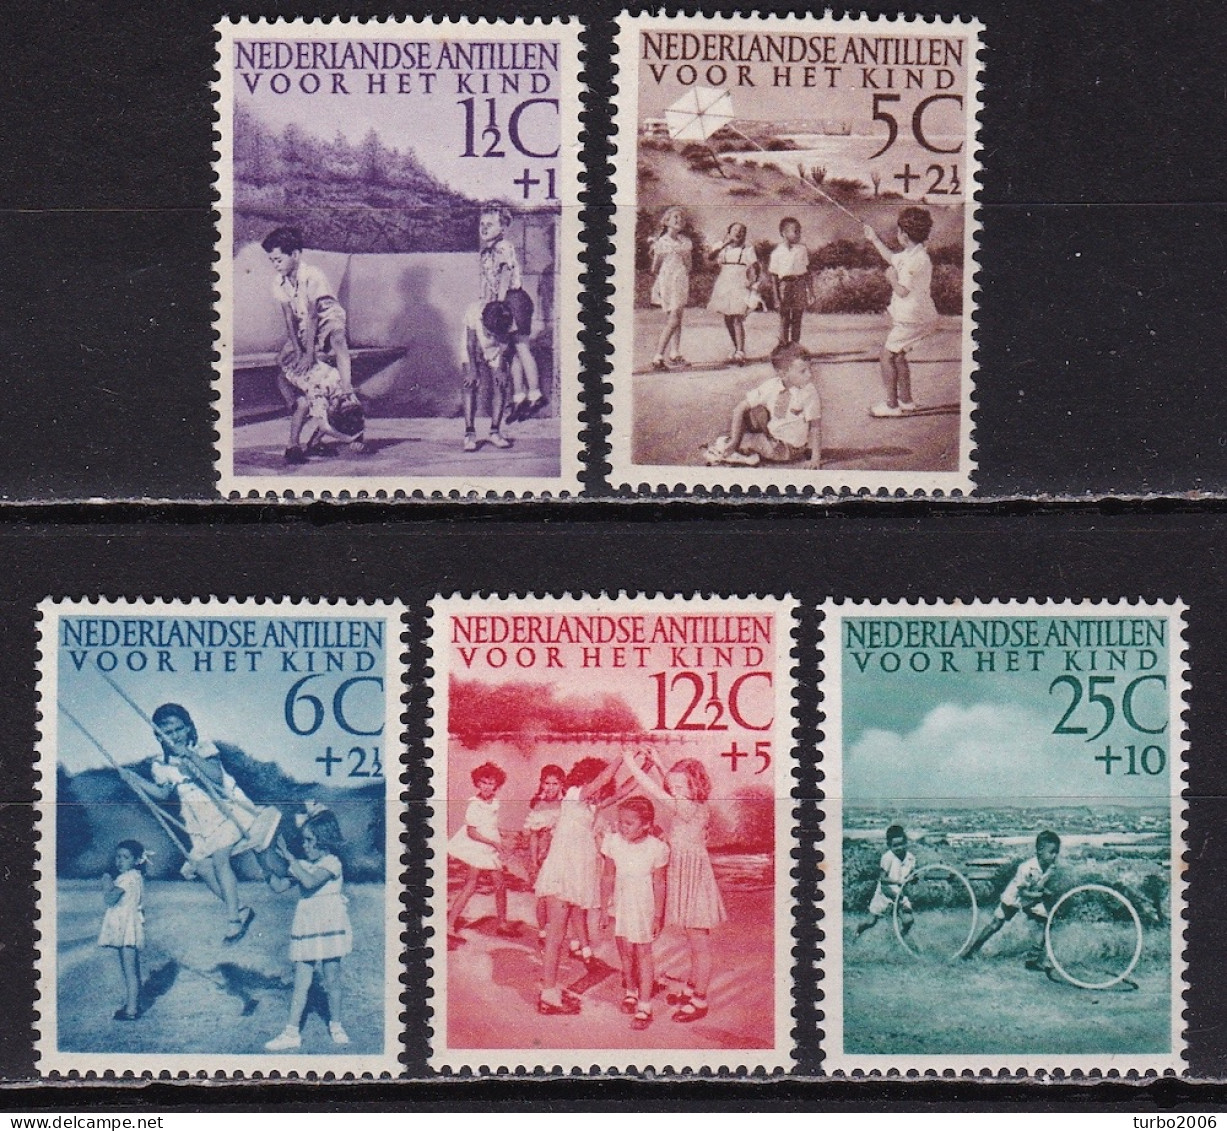 Ned. Antillen 1951 Kinderzegels Kinderspelen Complete Postfrisse Serie NVPH 234 / 238 - Curaçao, Nederlandse Antillen, Aruba